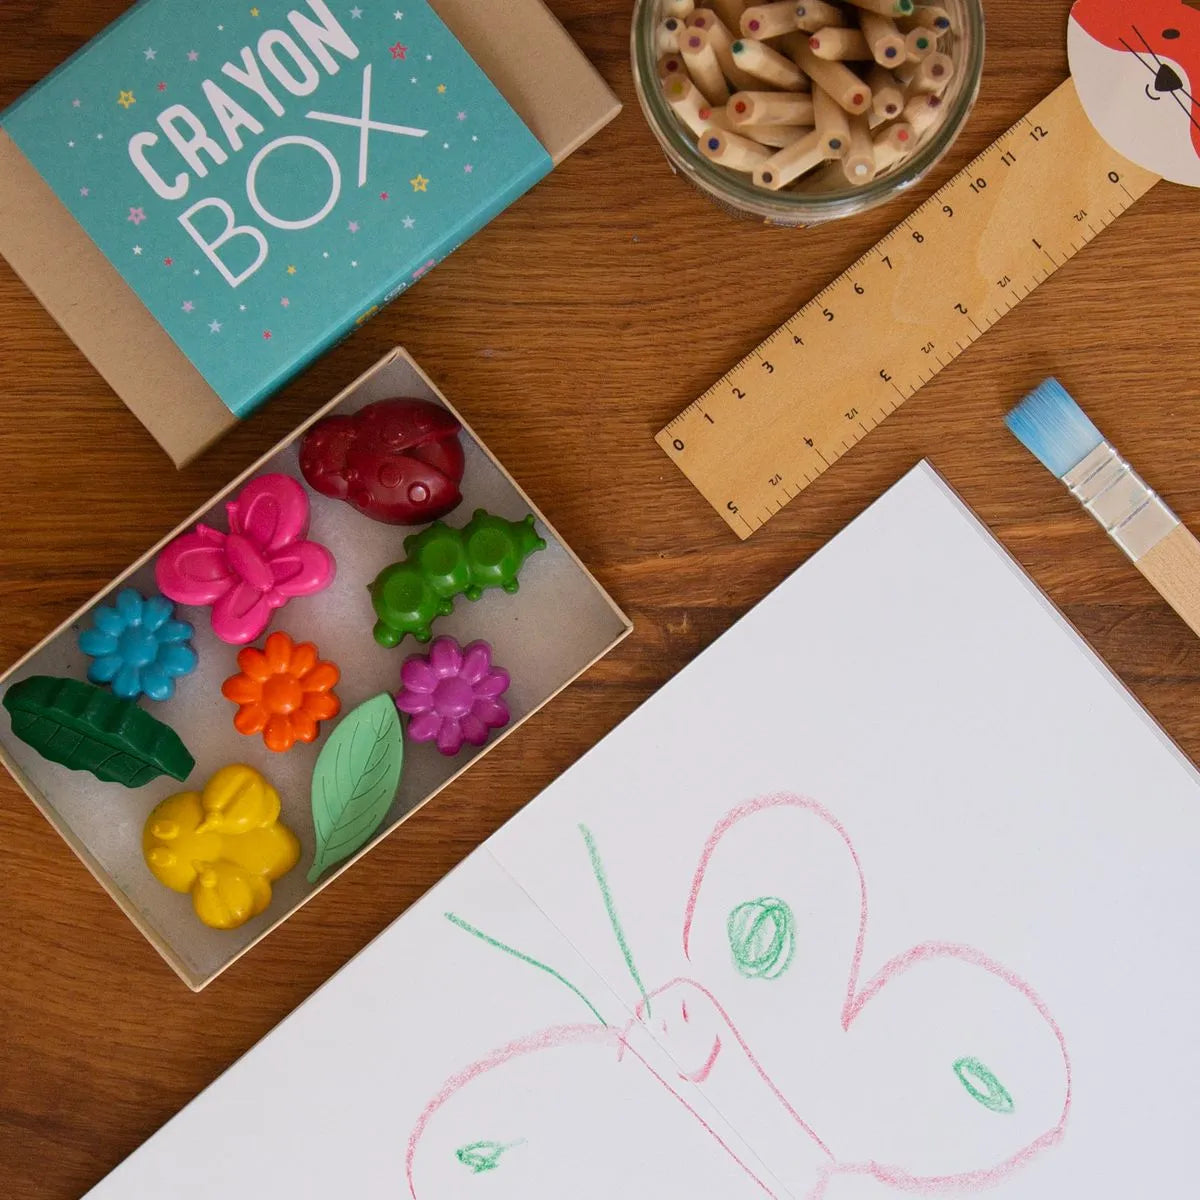 Crayon box - minibeast